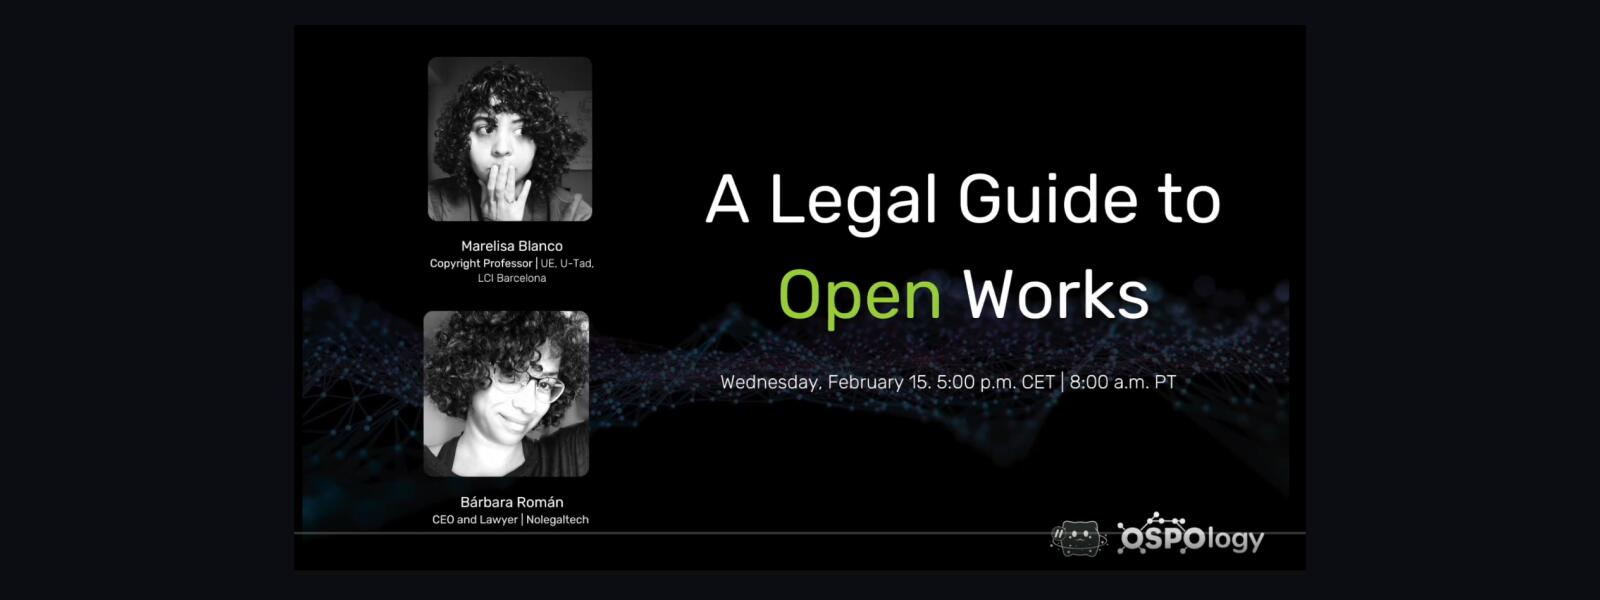 Publicado o webinar OSPOlogy: A Legal Guide to Open Works in Public Administration